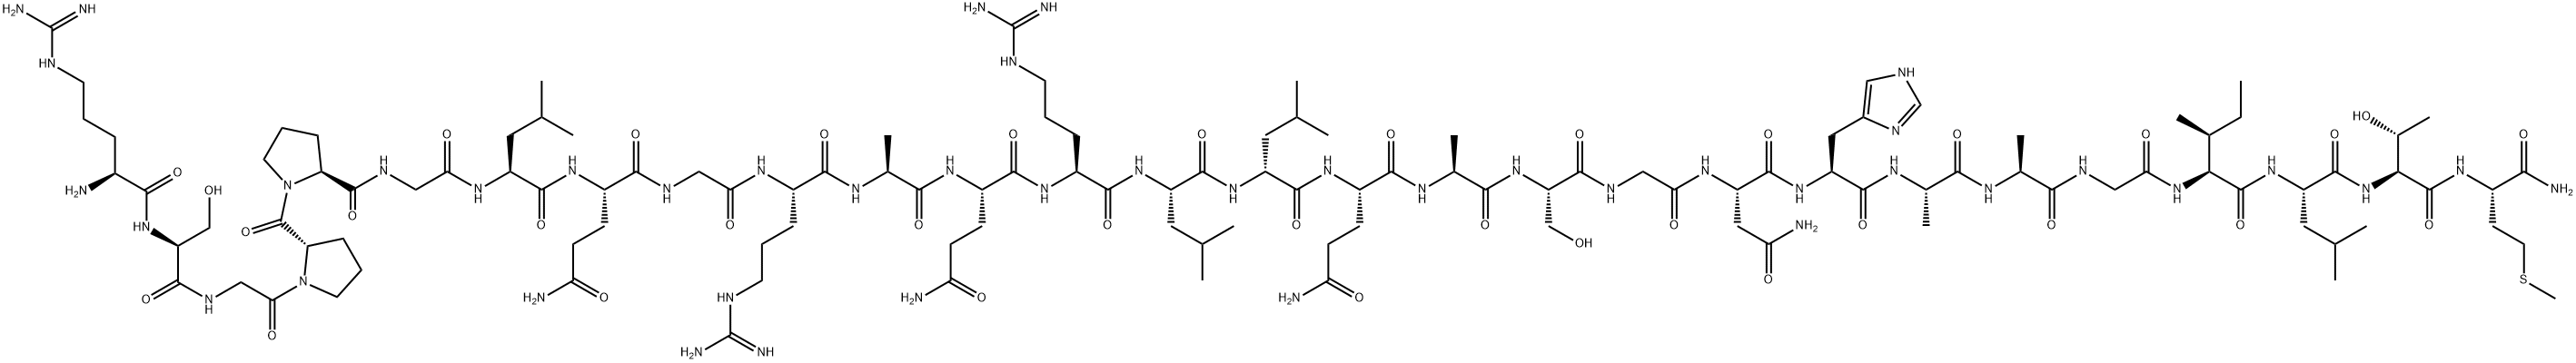 [ALA11,D-LEU15]-オレキシンB 化学構造式